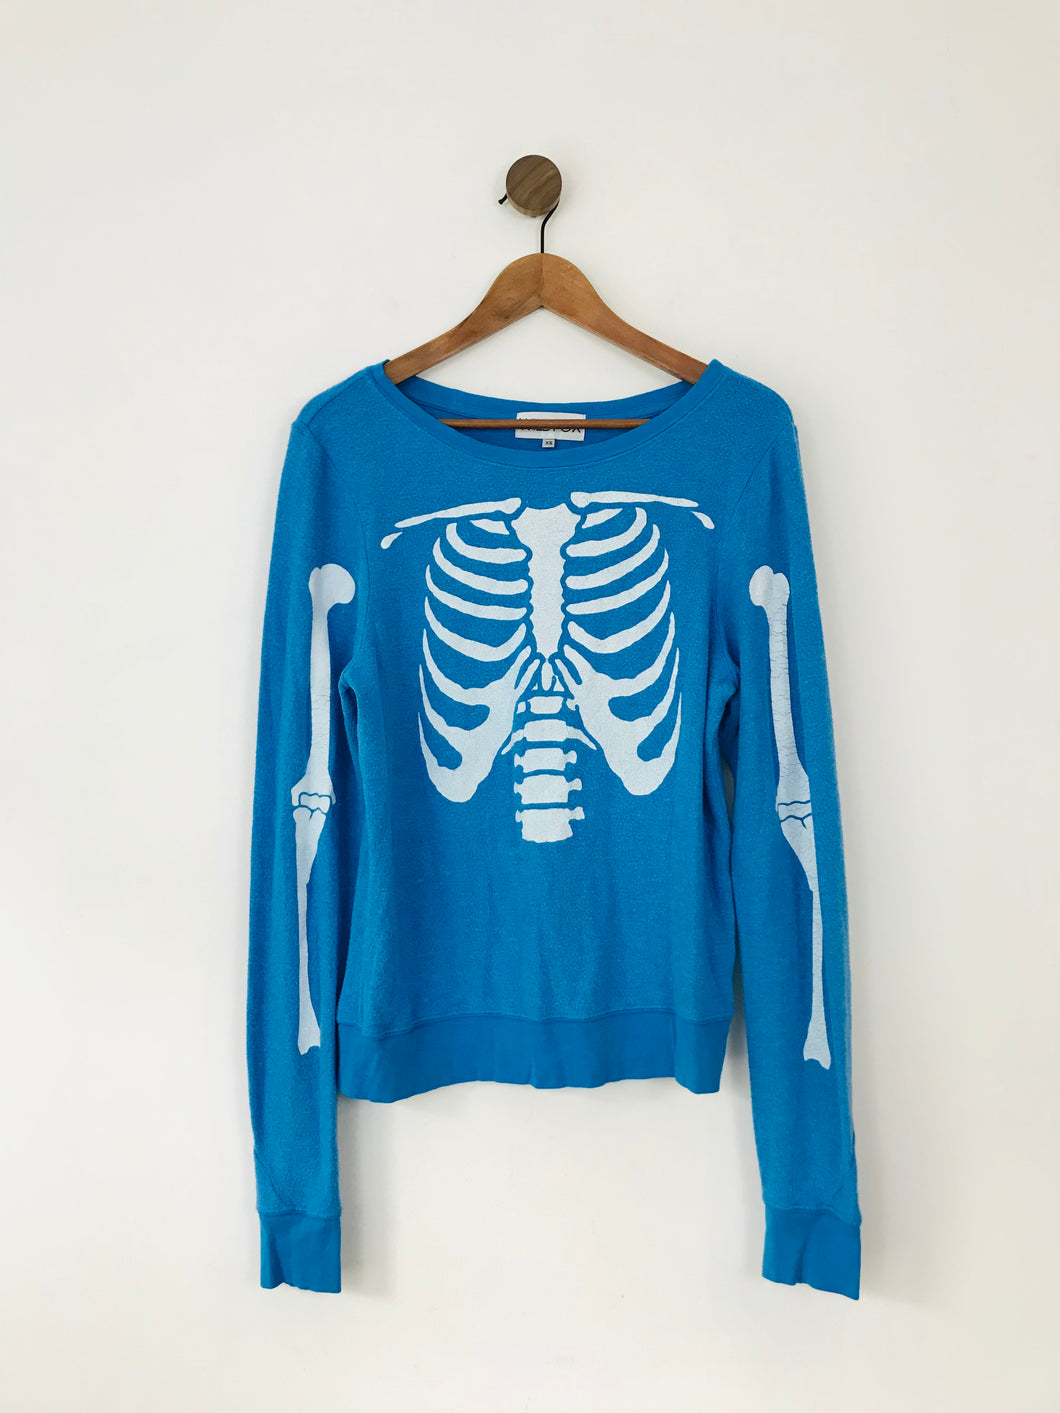 Wildfox Women’s Graphic Skeleton Jumper | XS UK6 | Blue